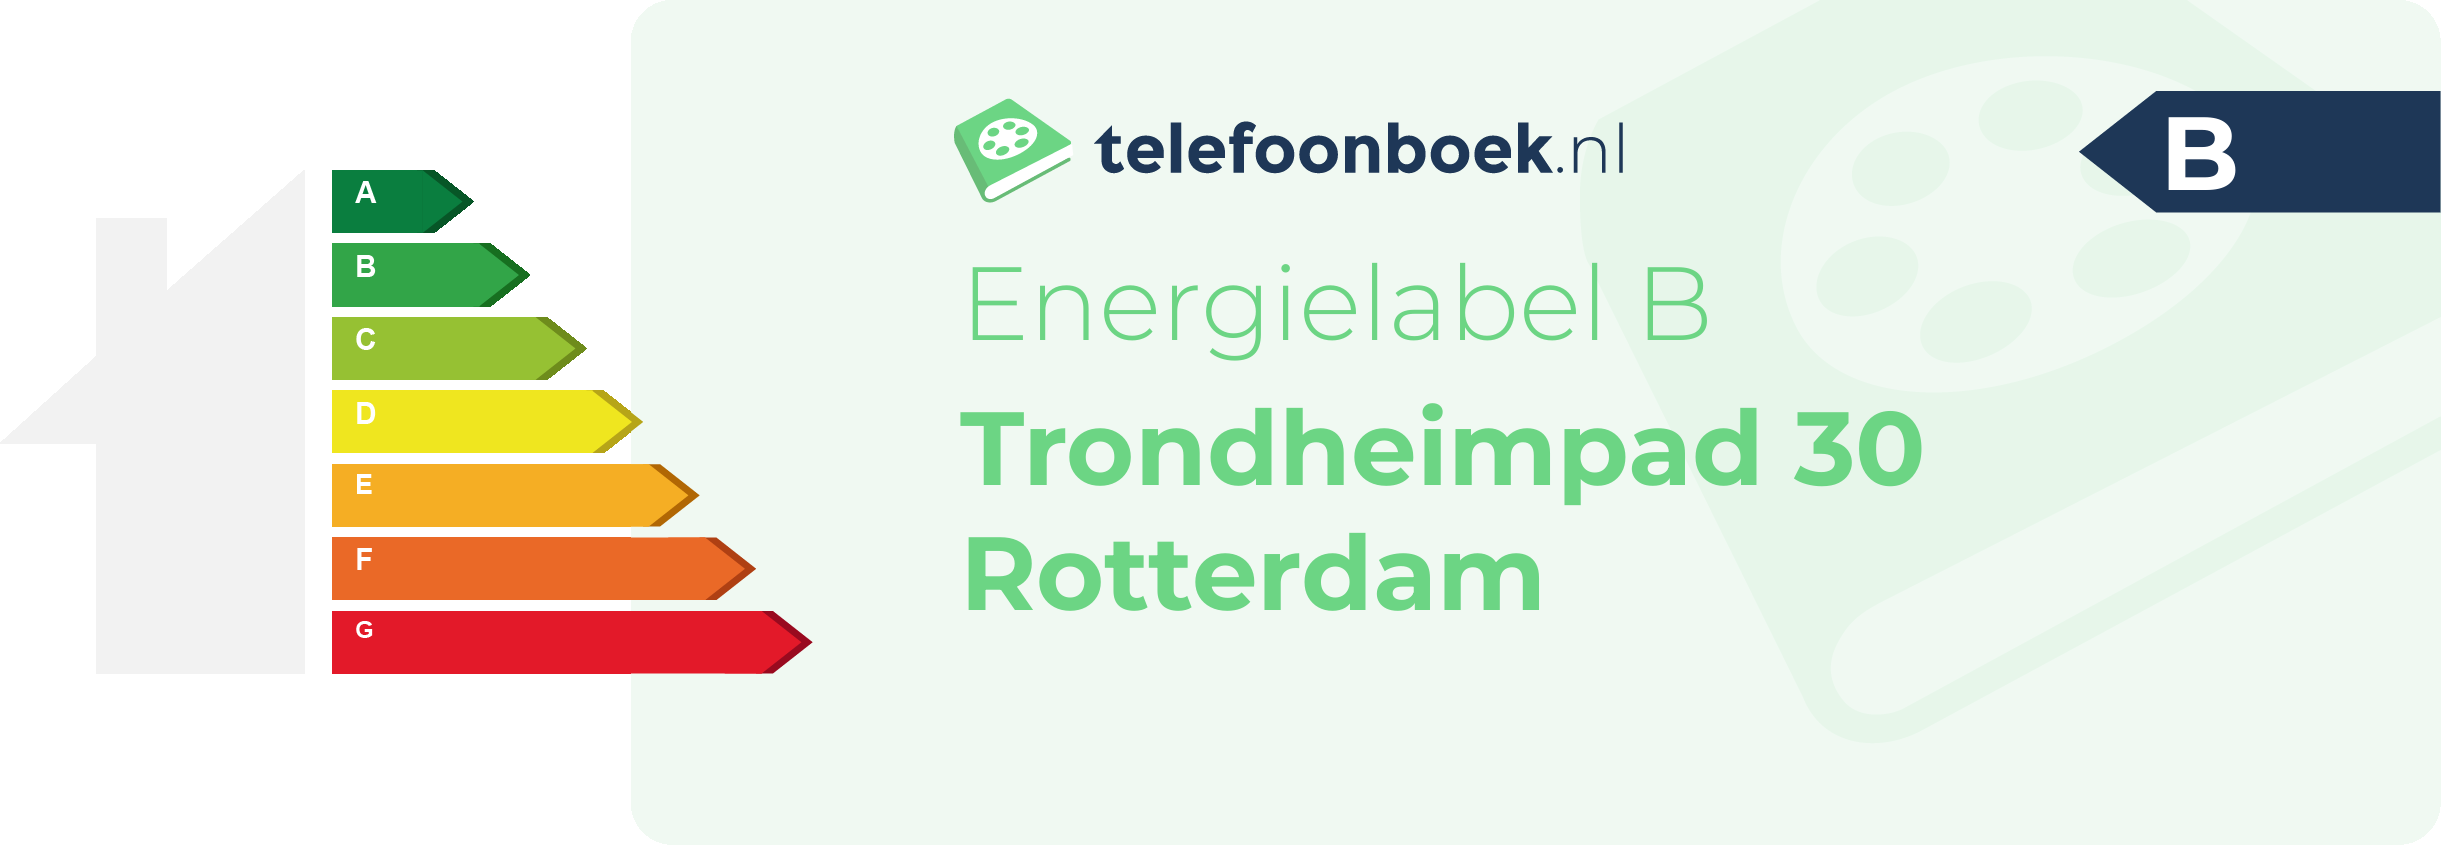 Energielabel Trondheimpad 30 Rotterdam